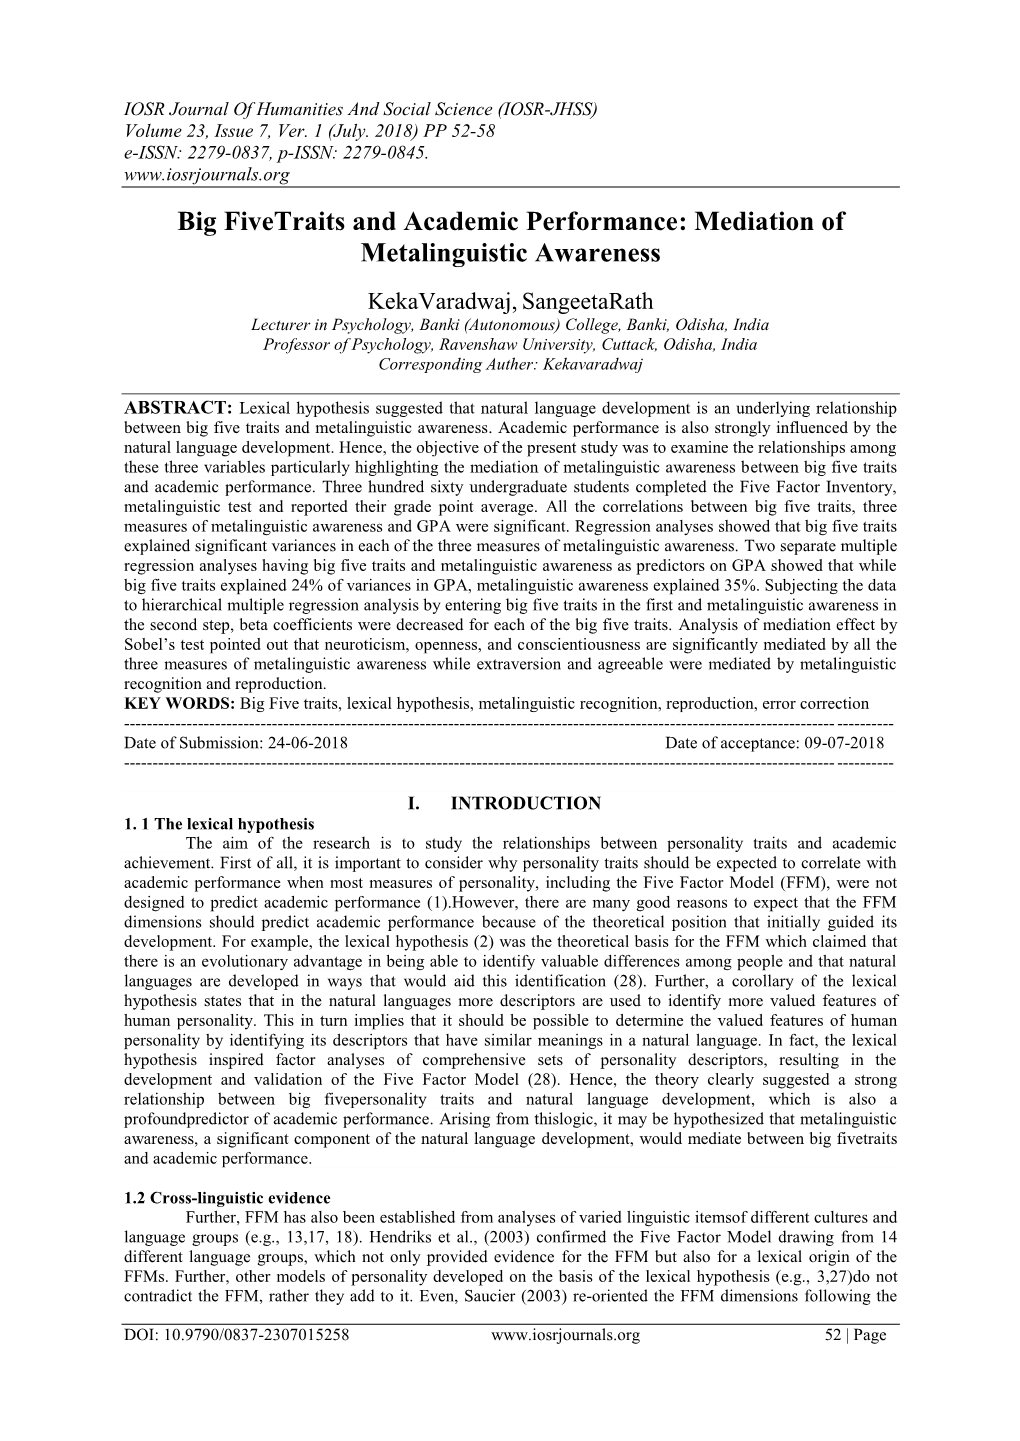 Big Fivetraits and Academic Performance: Mediation of Metalinguistic Awareness